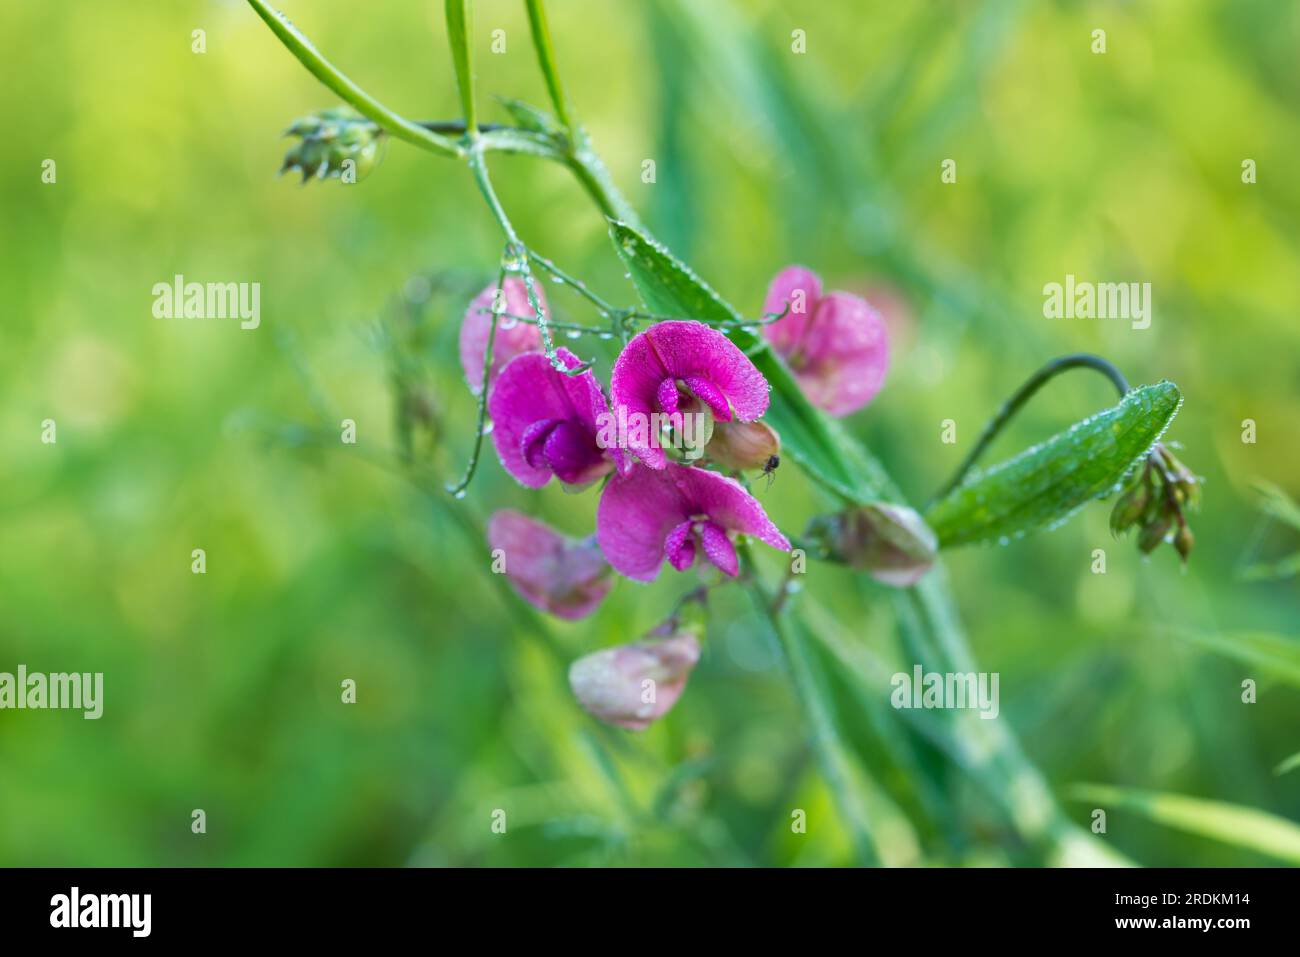 Lathyrus sylvestris, flat pea flowers with morning dew closeup selective focus Stock Photo